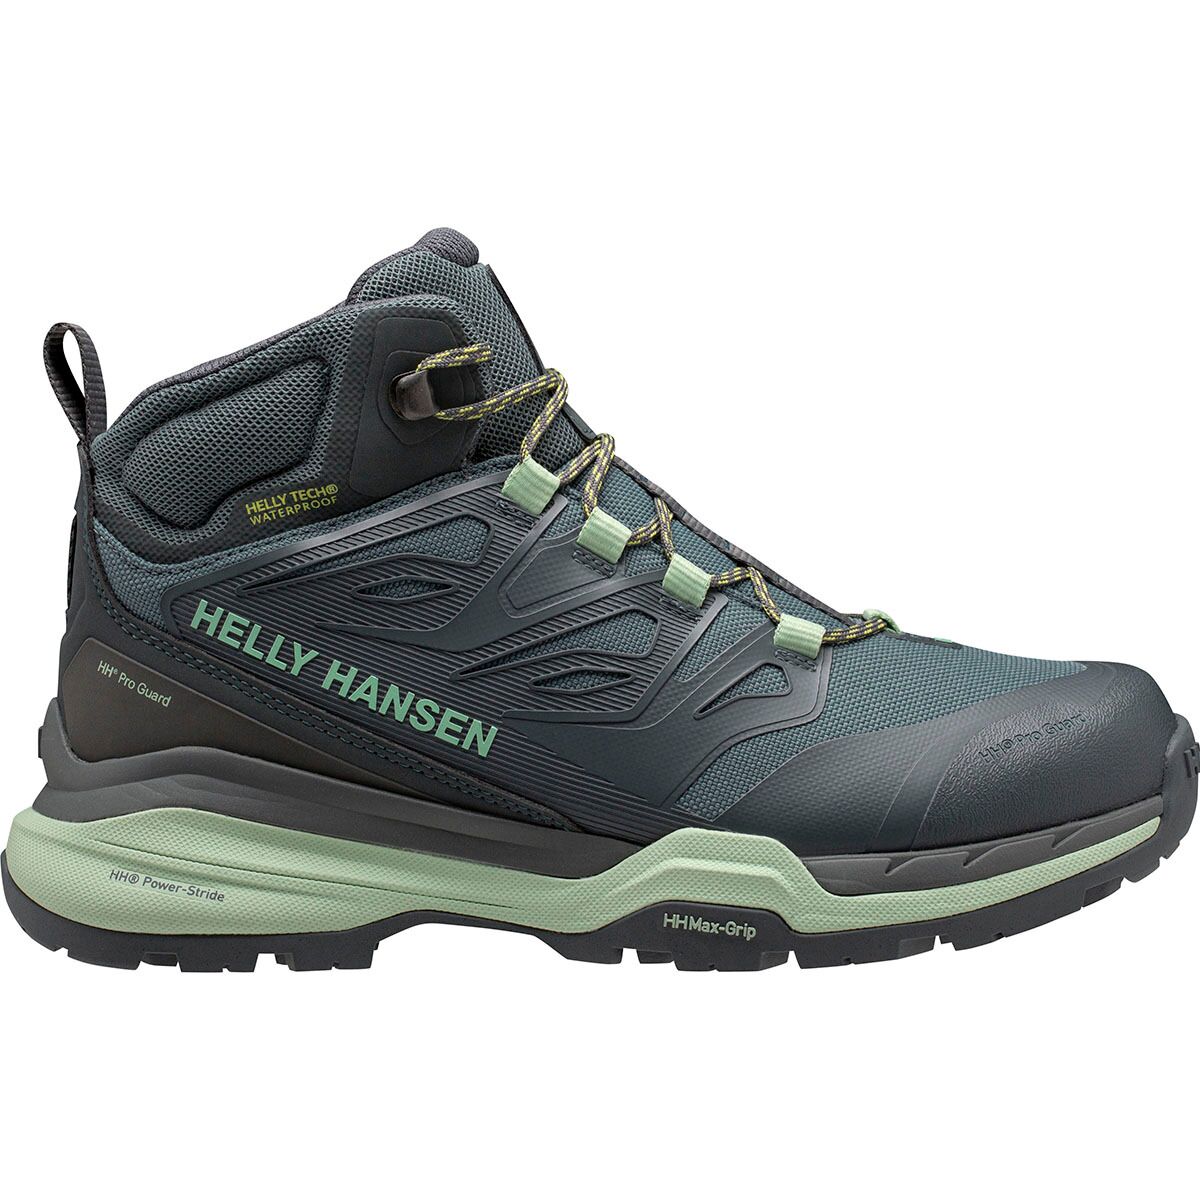 Helly Hansen Traverse HT Hiking Shoe - Women's